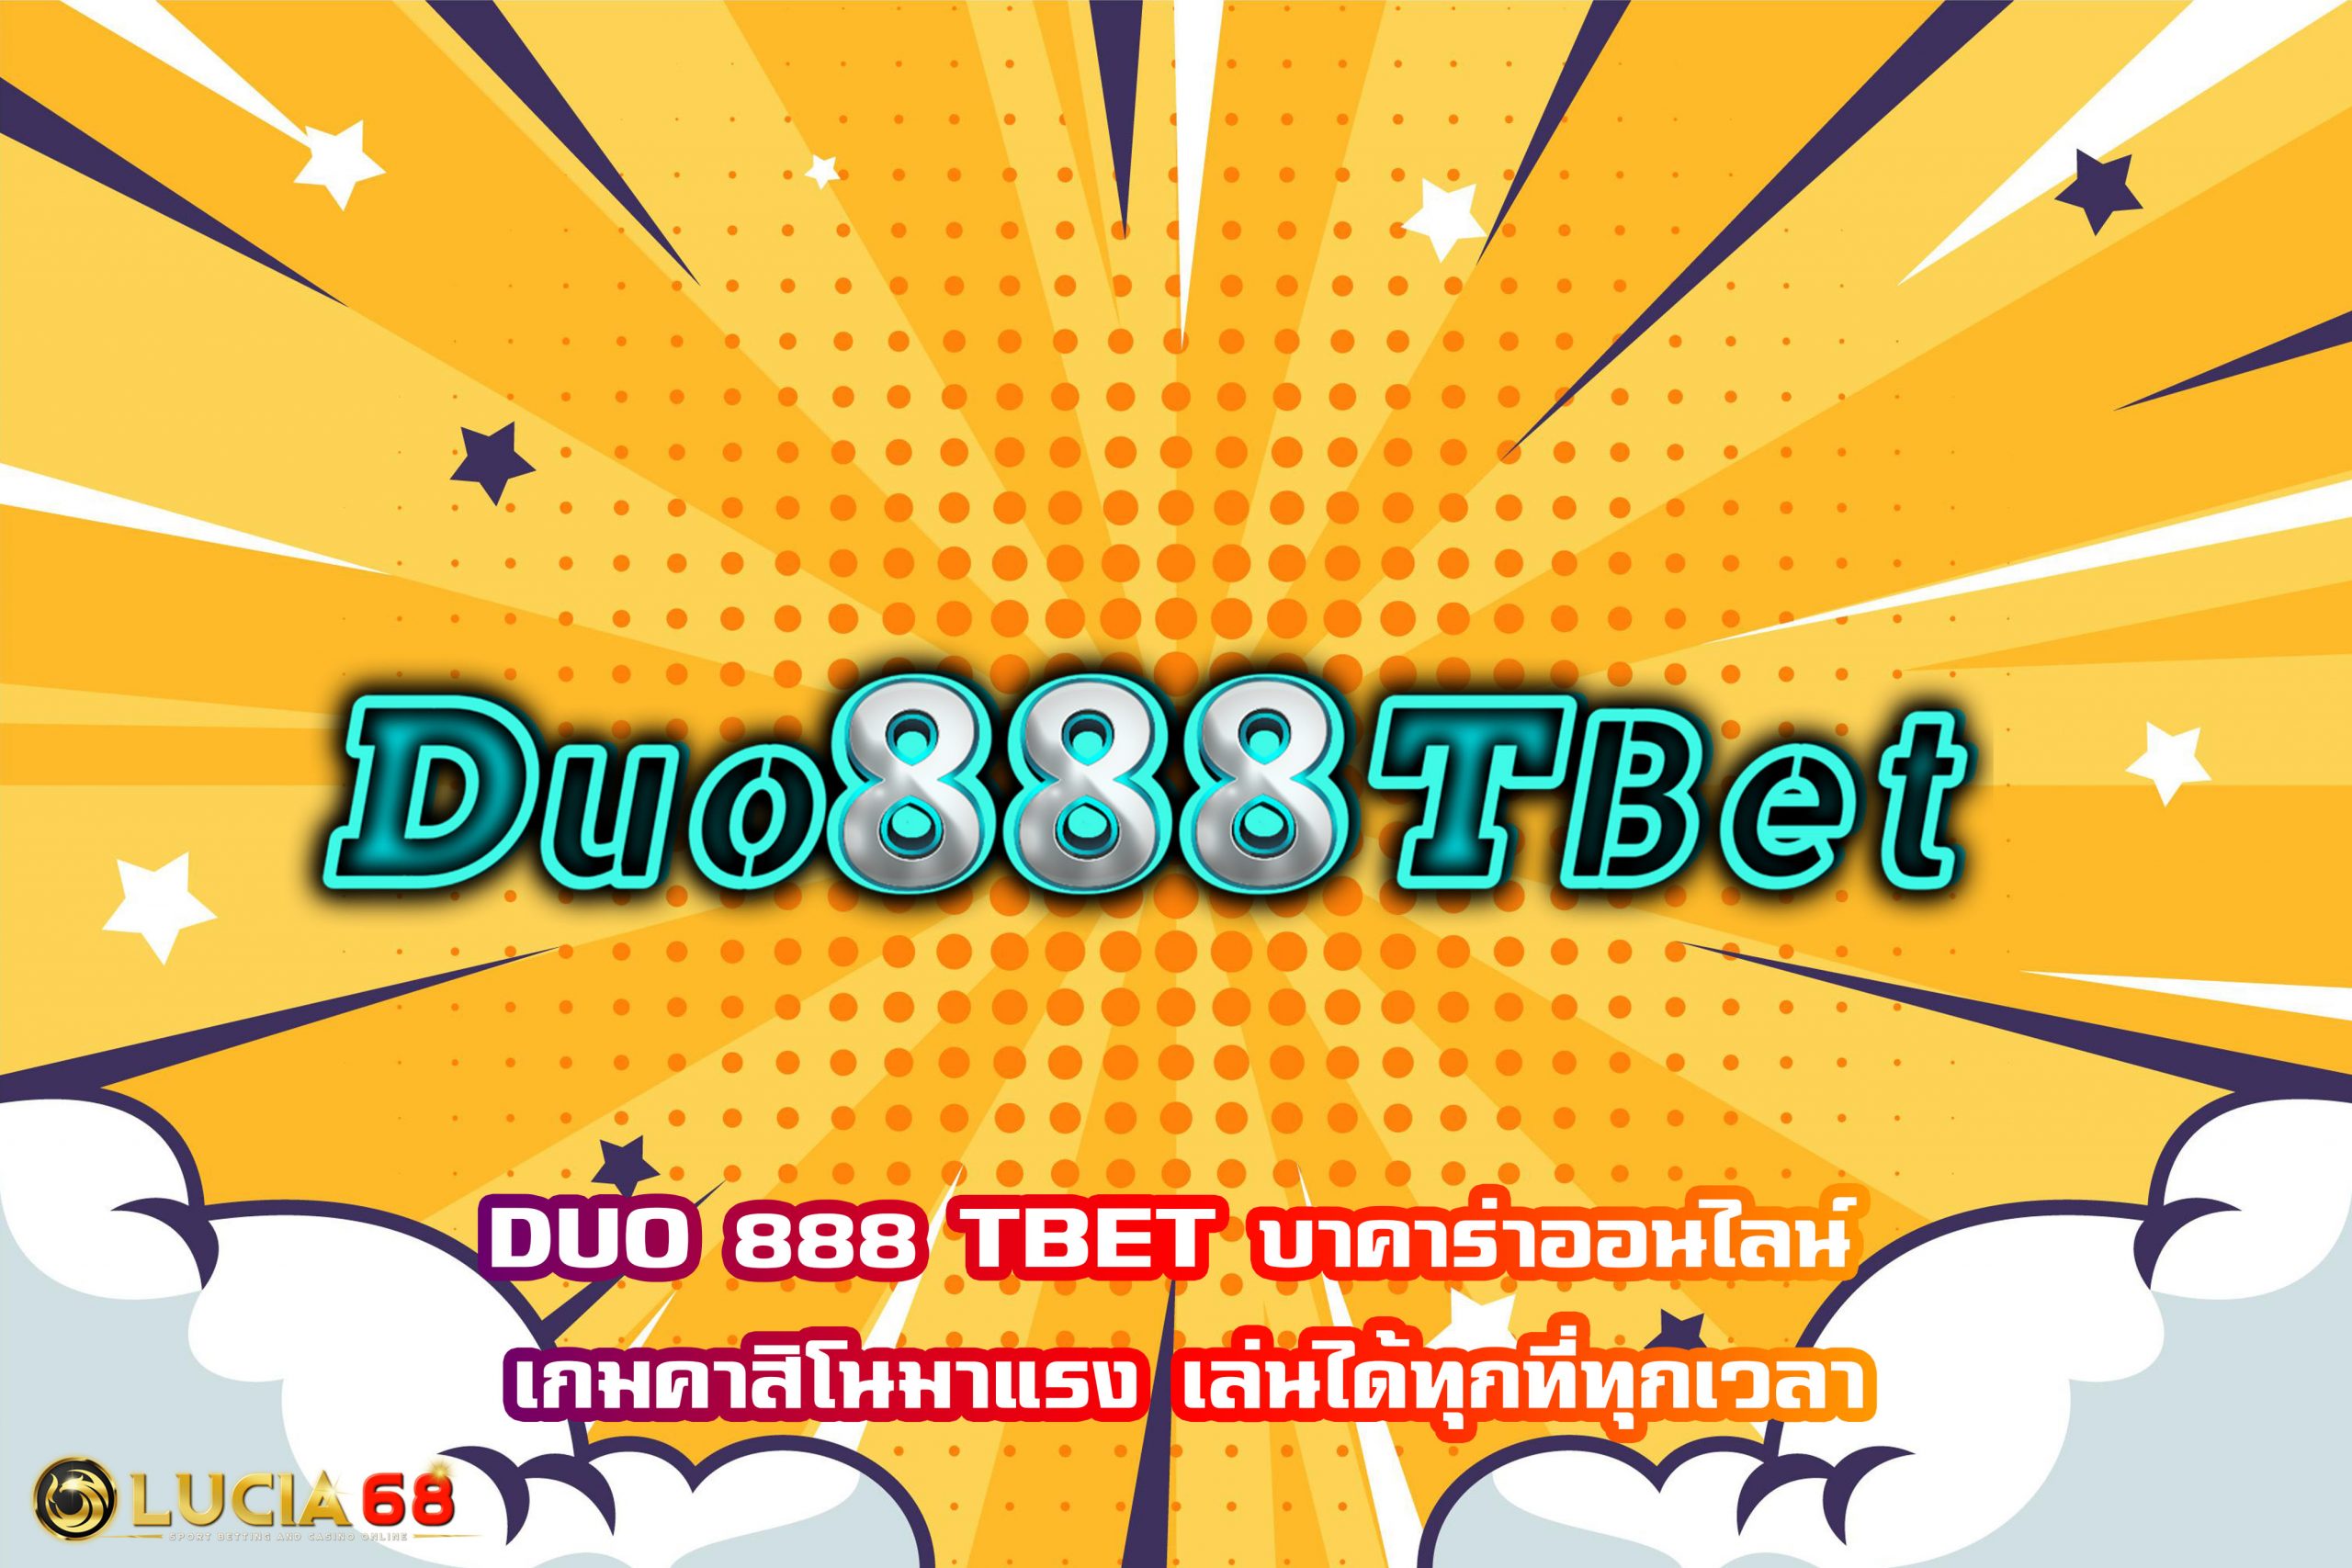 DUO 888 TBET บาคาร่าออนไลน์ เกมคาสิโนมาแรง เล่นได้ทุกที่ทุกเวลา